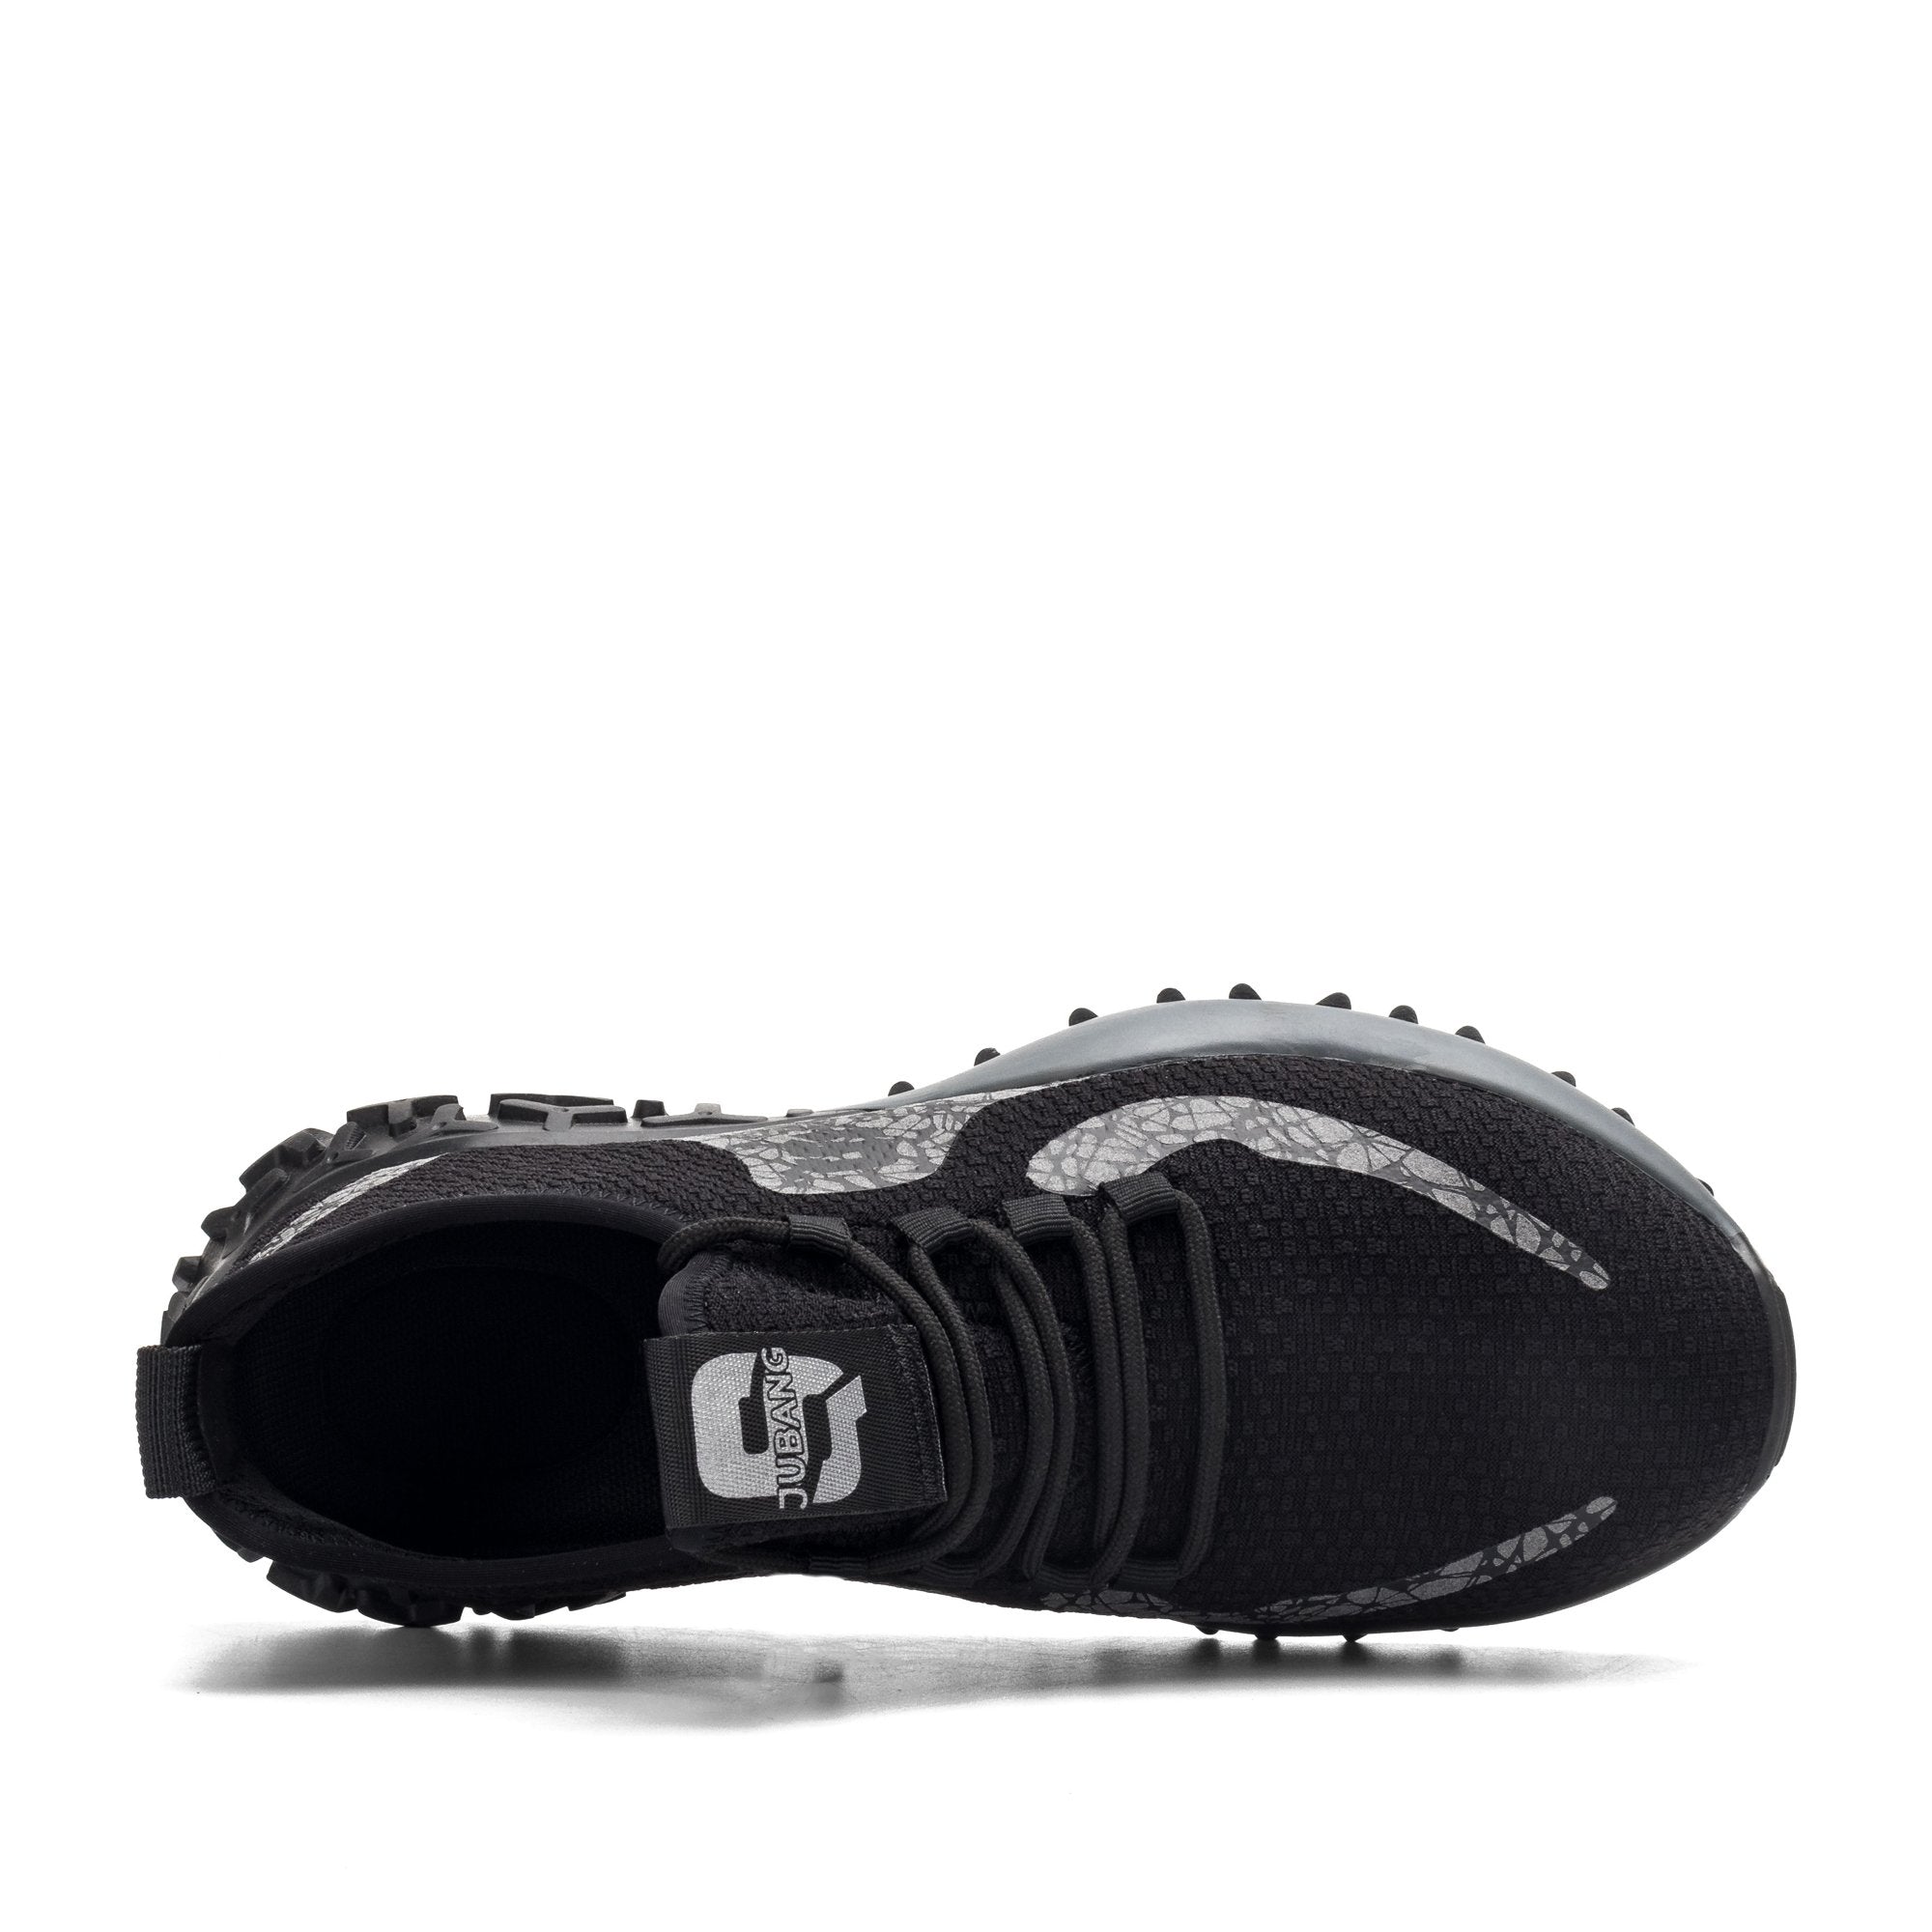 S Series Black Grey - Indestructible Shoes